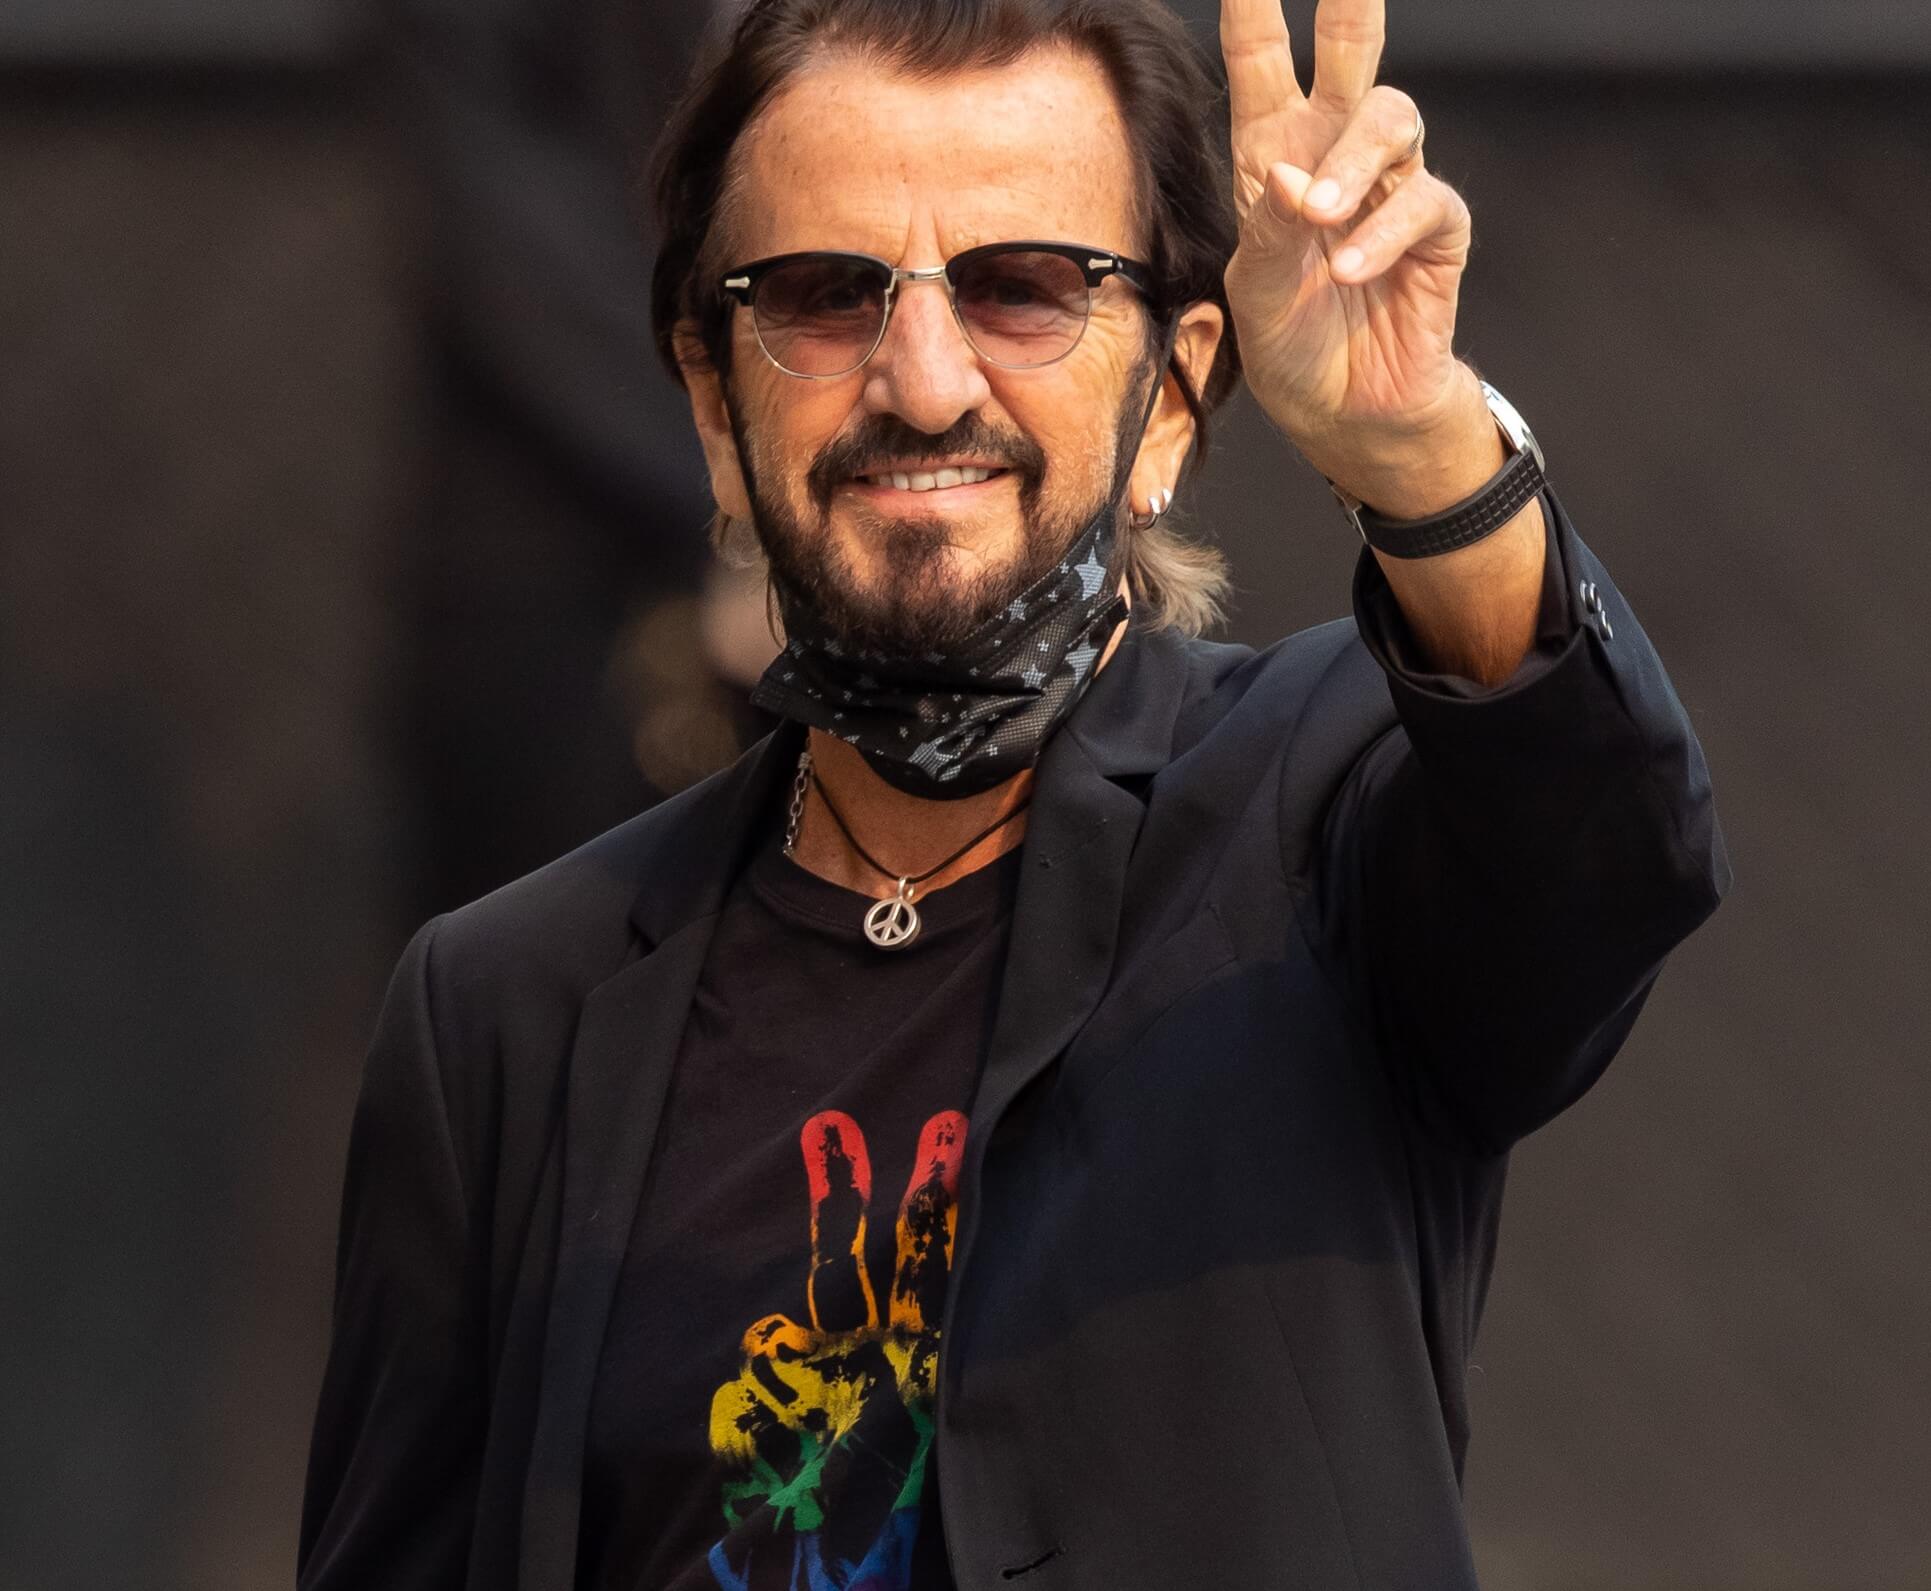 "Snookeroo" singer Ringo Starr wearing a suit